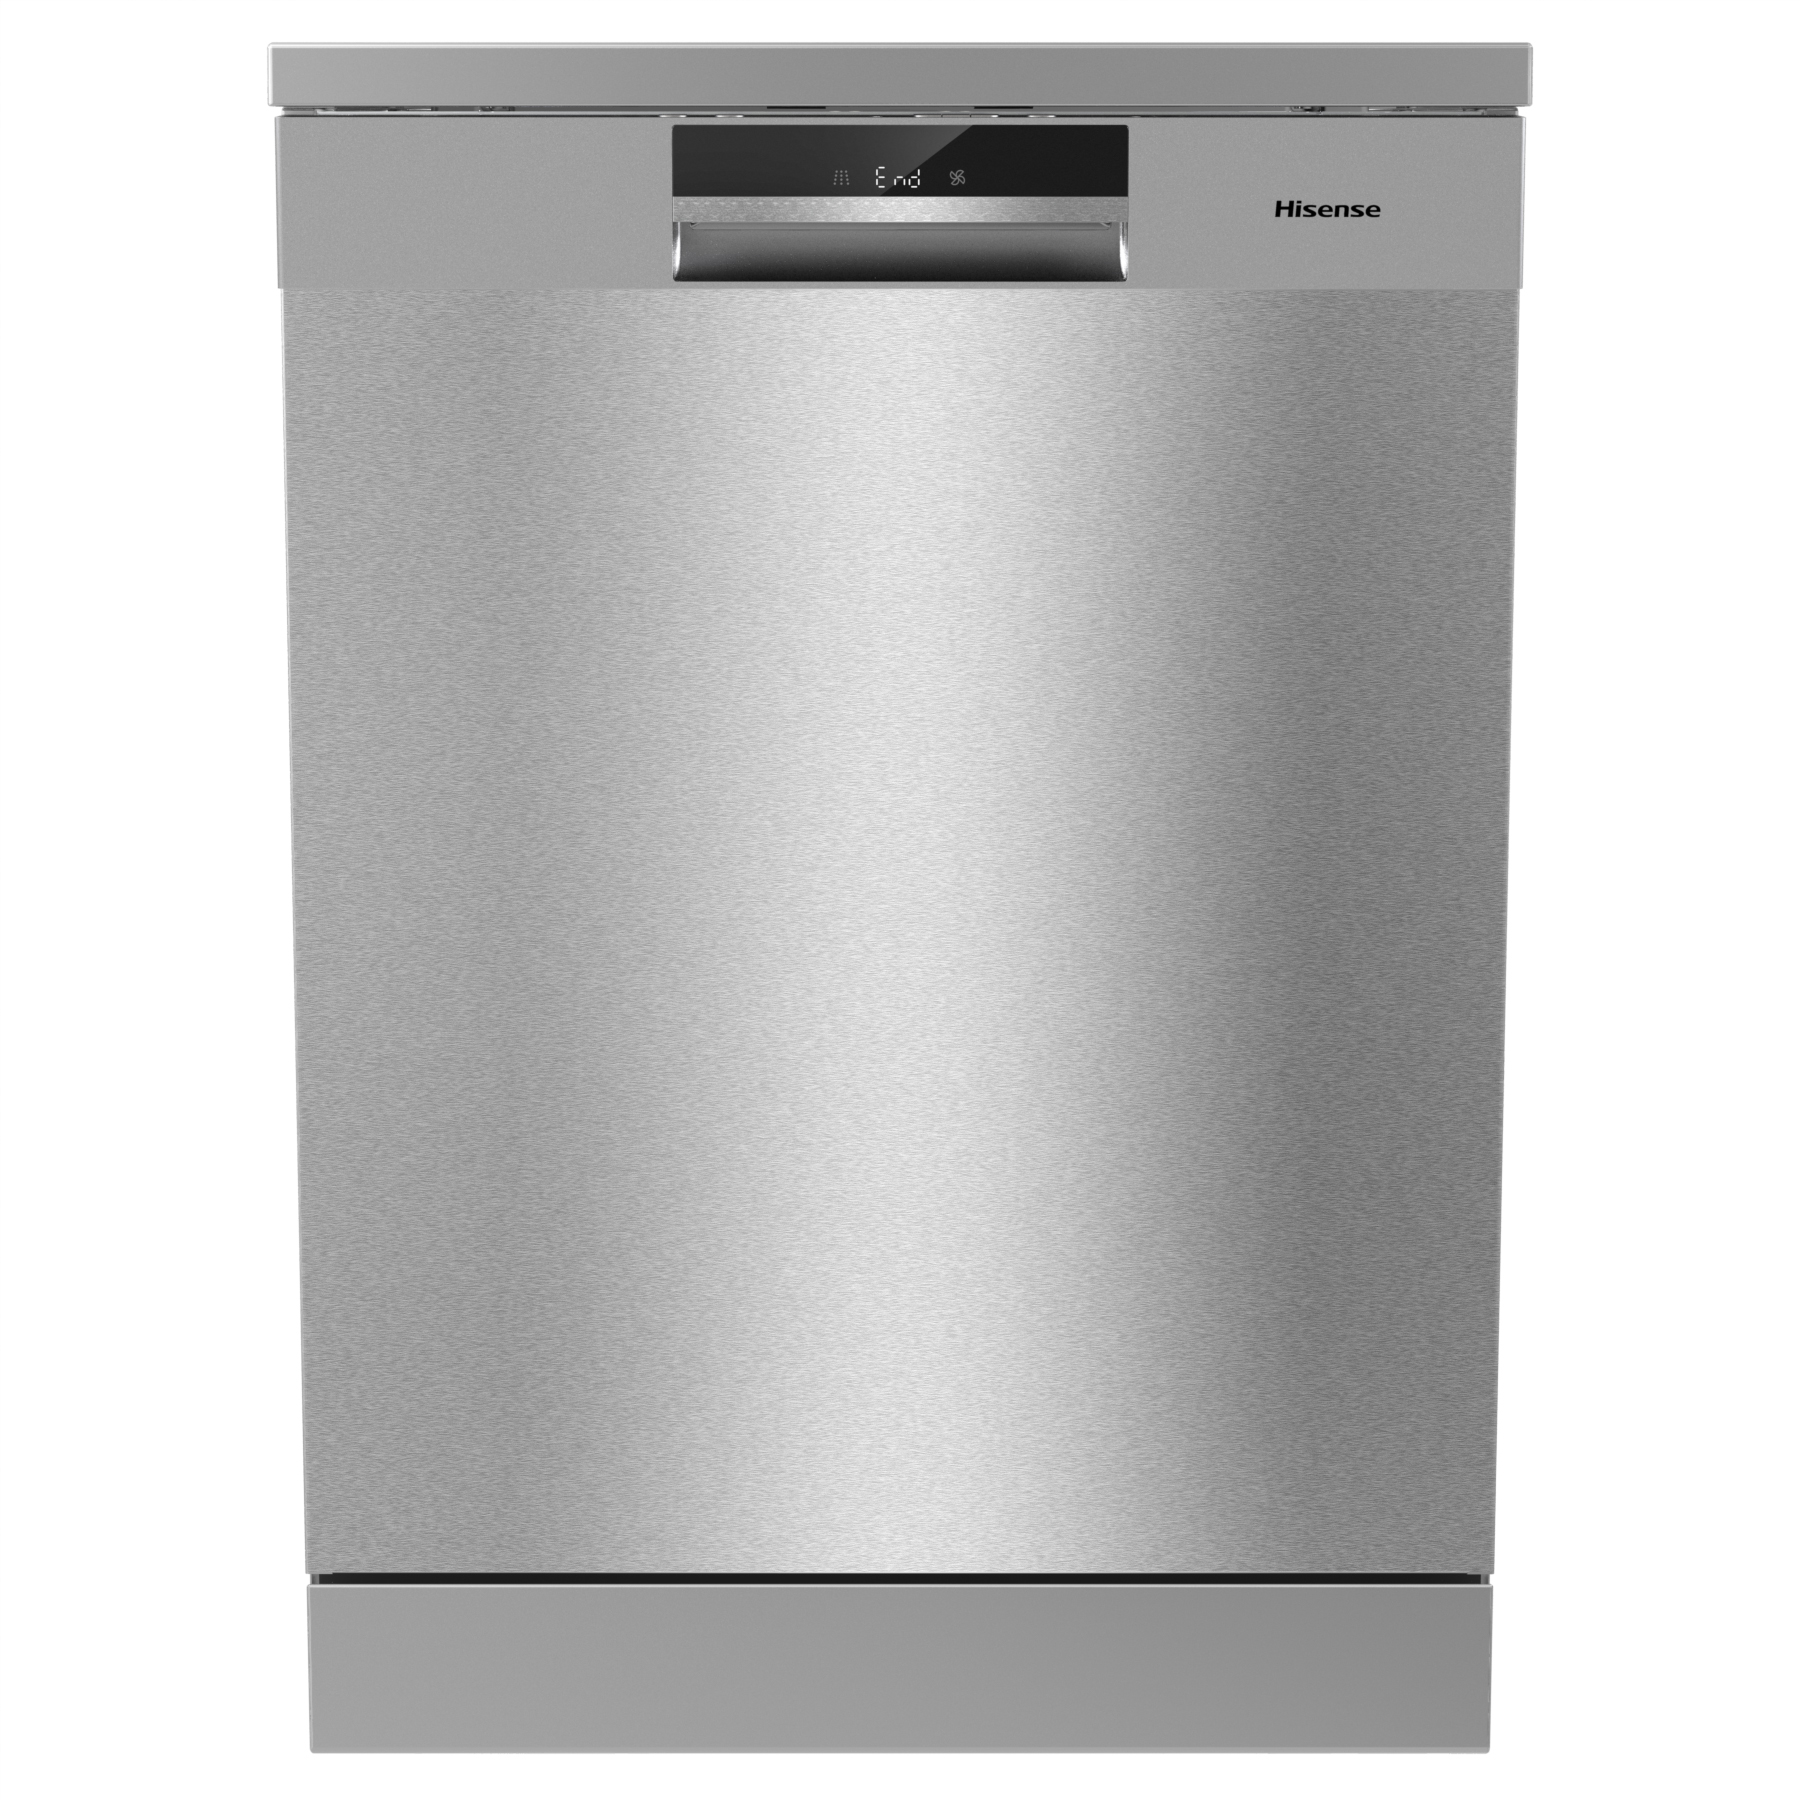 Hisense HS6130X Dishwasher